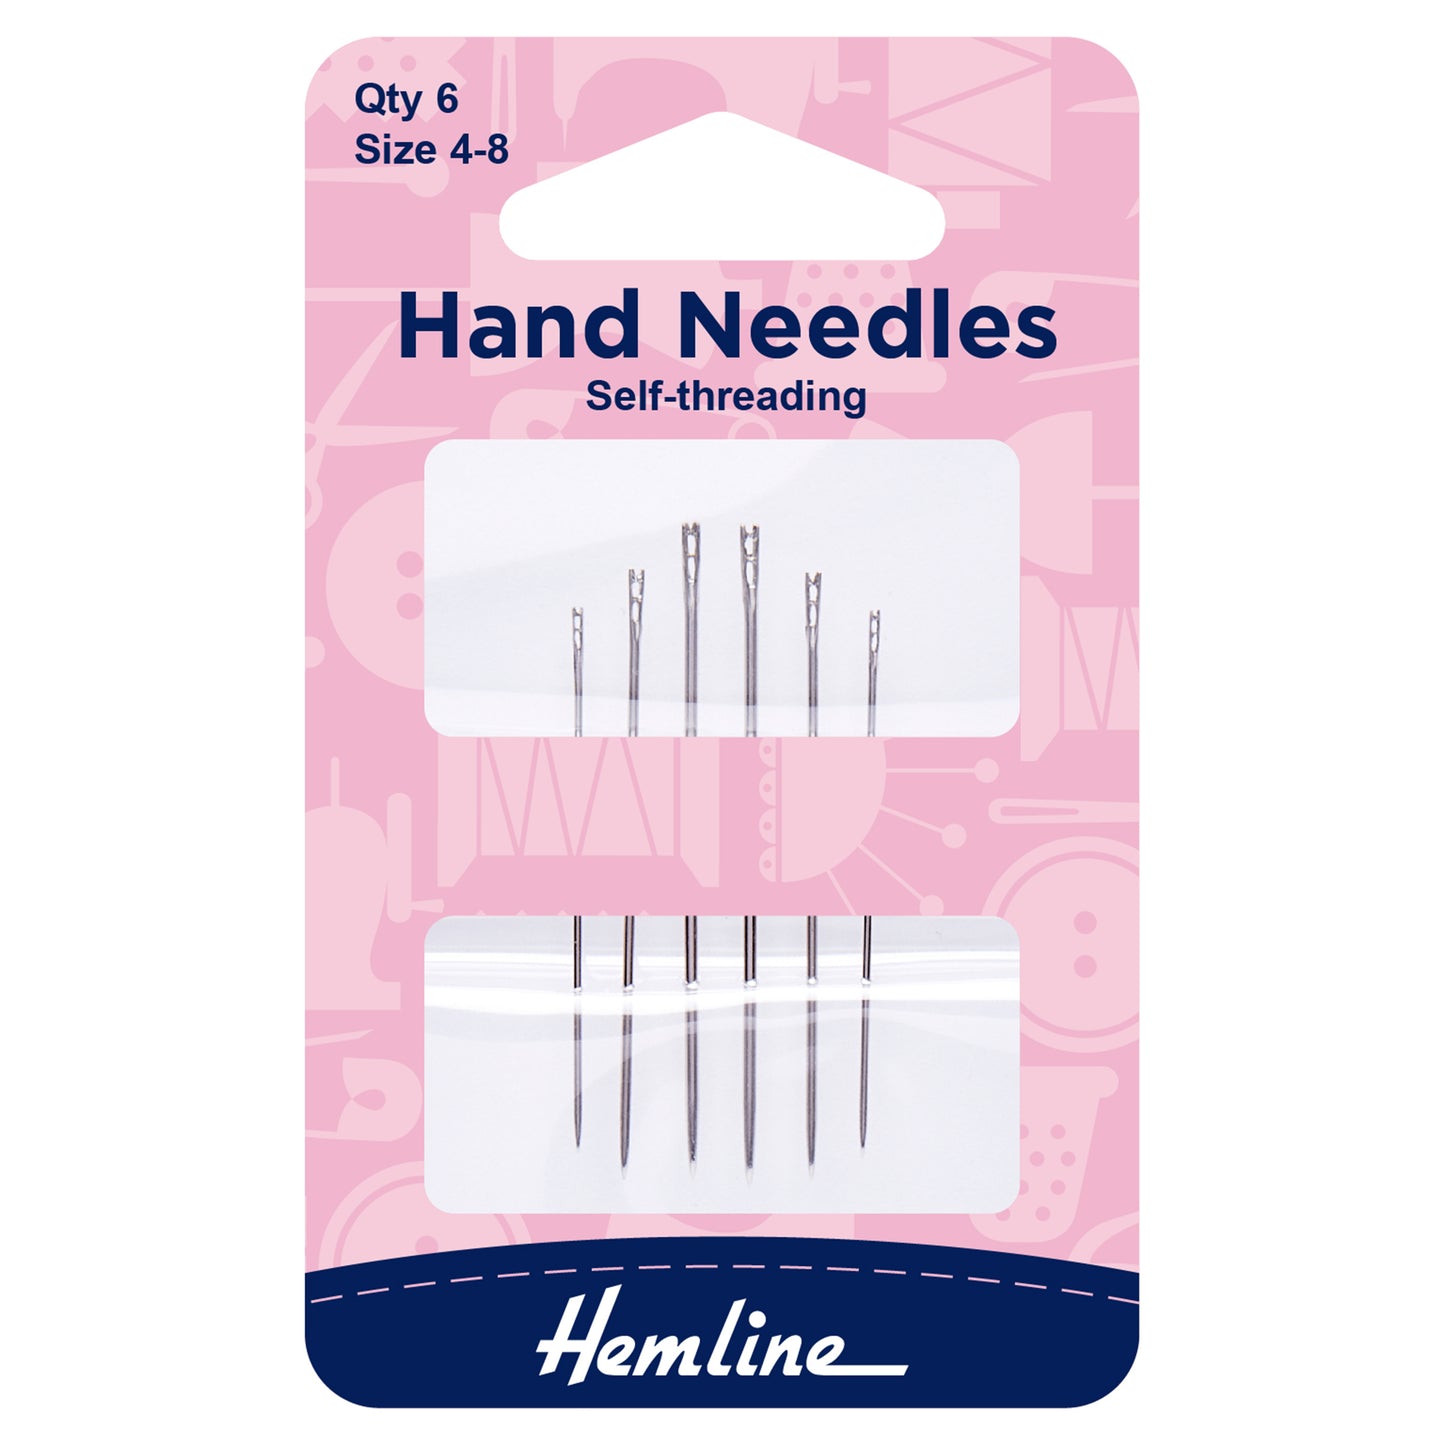 Hand Needles- Easy Threading size 4-8